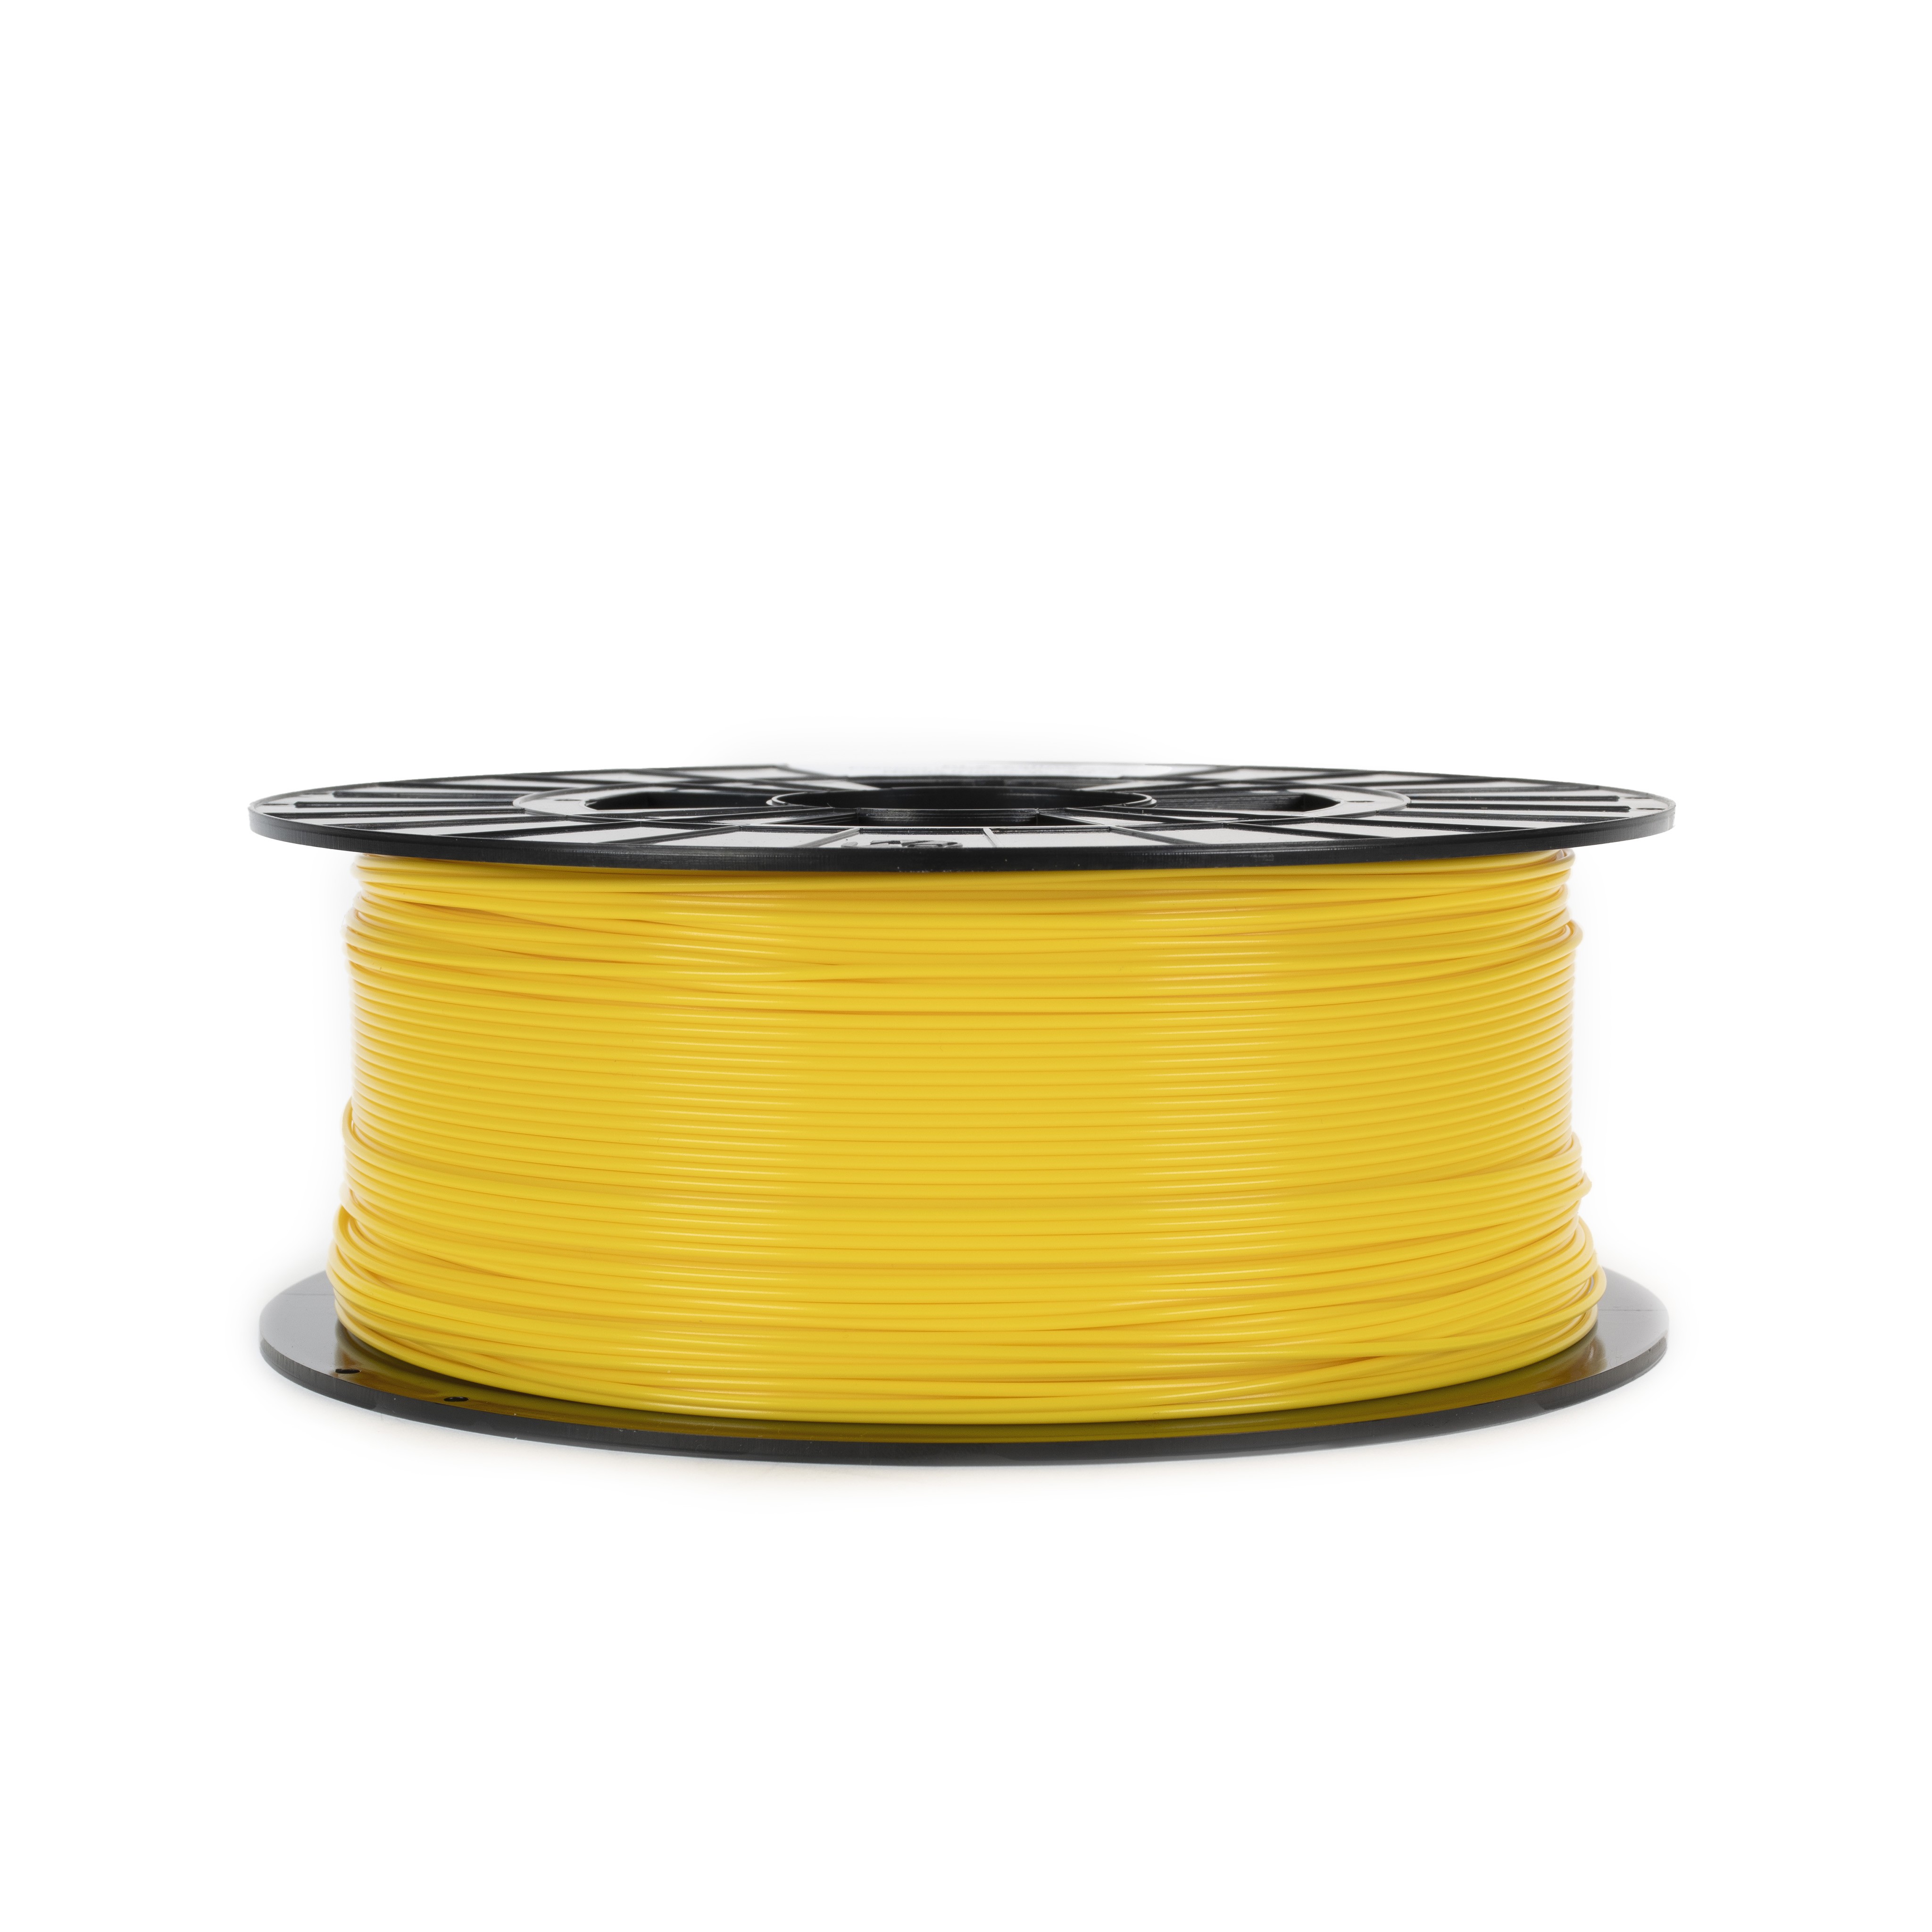 Filamento giallo PLA 1kg  Stampanti 3D Original Prusa direttamente da  Josef Prusa